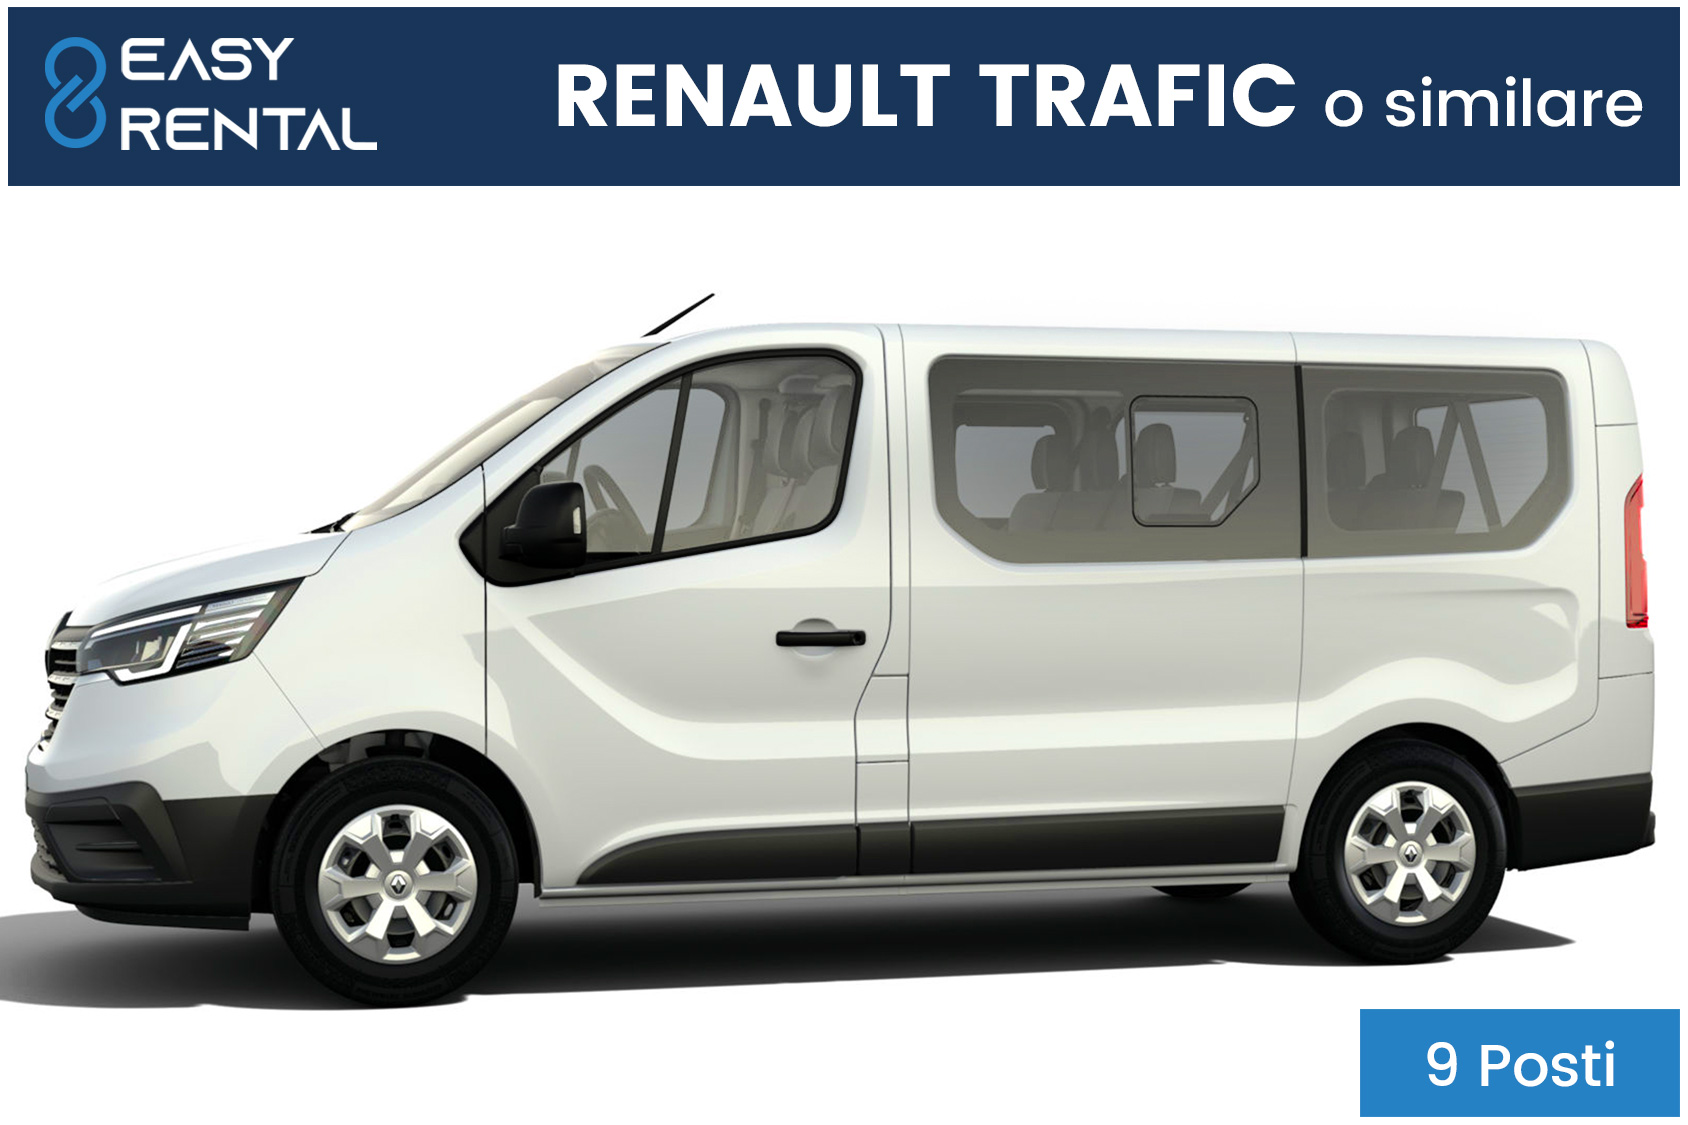 Renault Trafic noleggio breve termine veicoli 9 posti Verona e provincia